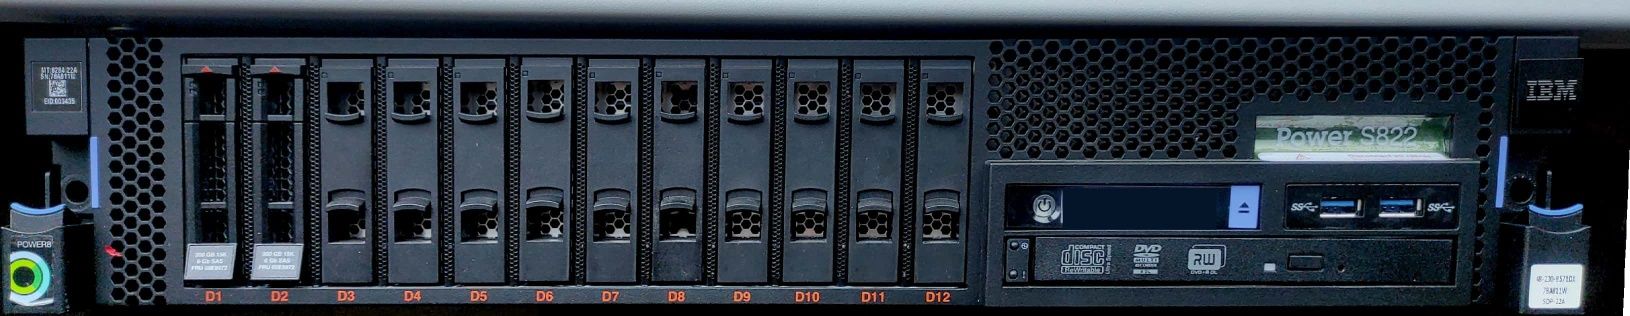 Сервер IBM Power System S822